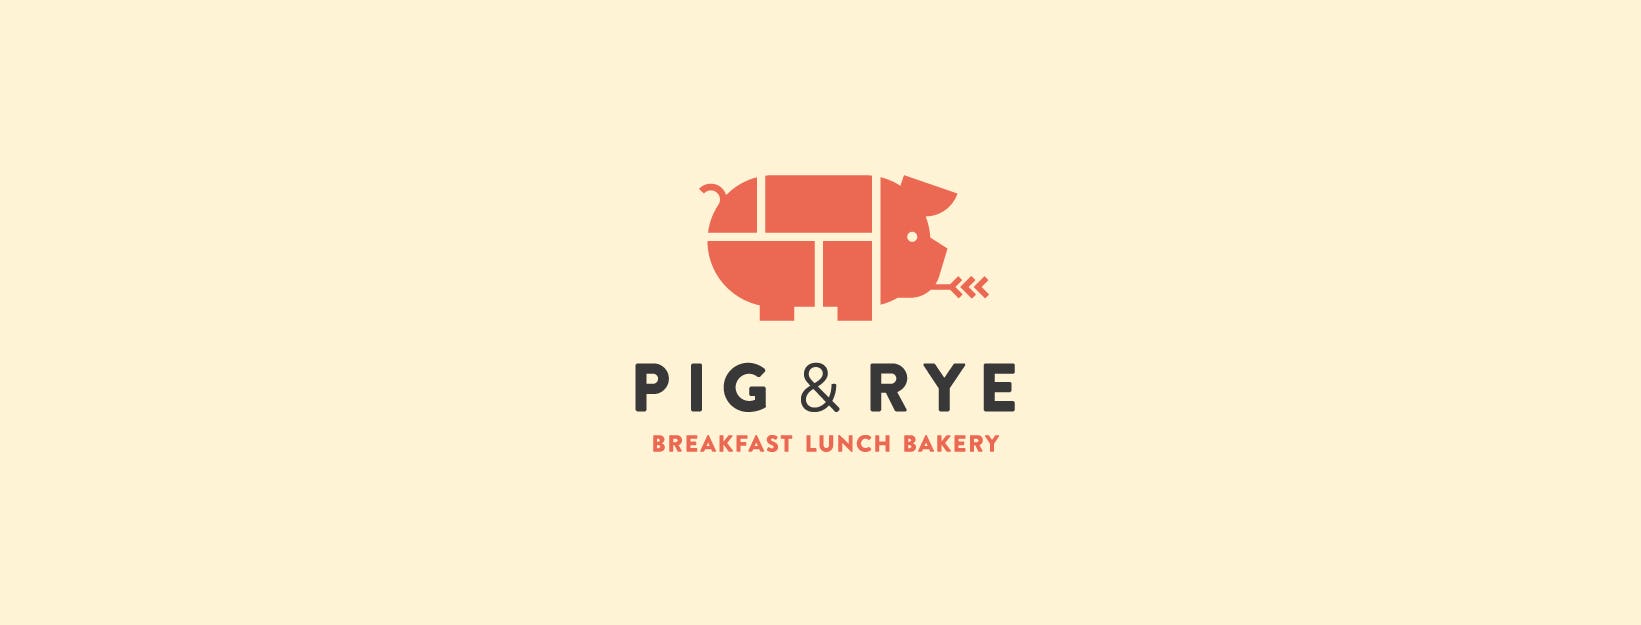 Pig & Rye in Tilburg staat te koop: chef Luc Martin gaat iets anders doen